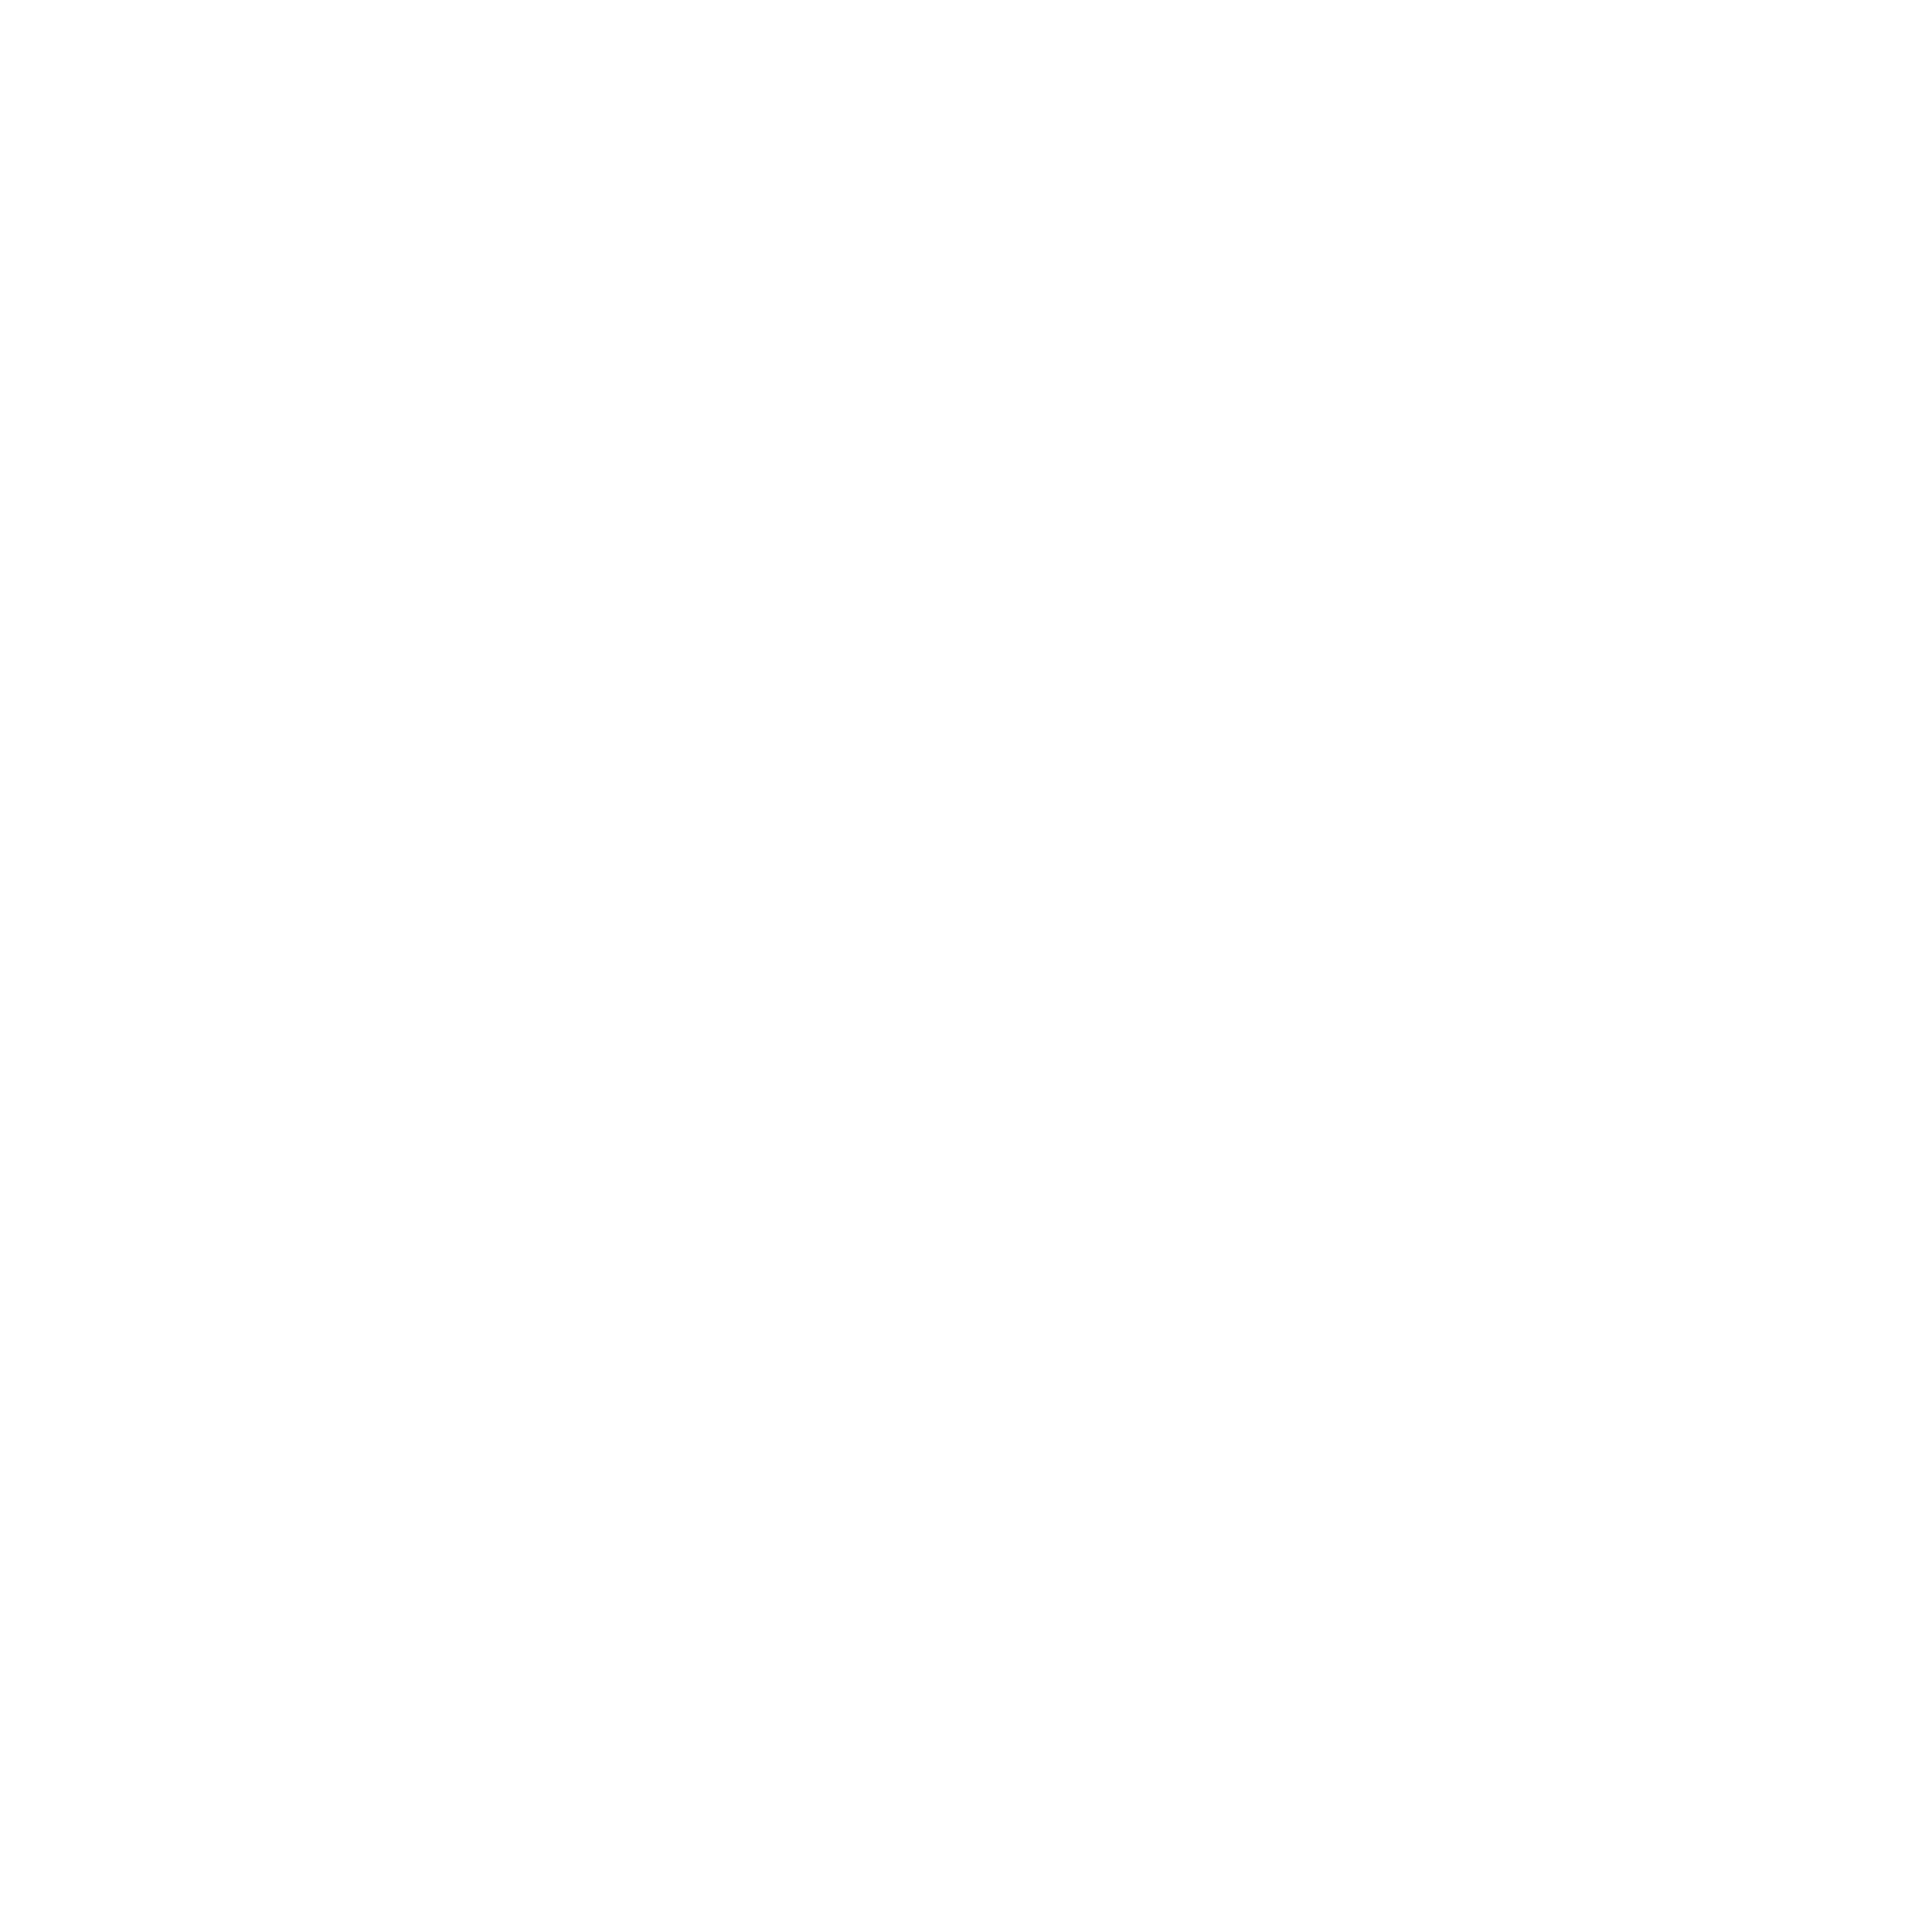 Visual Studio Code Logo - Visual Studio Code Logo PNG Transparent & SVG Vector - Freebie Supply